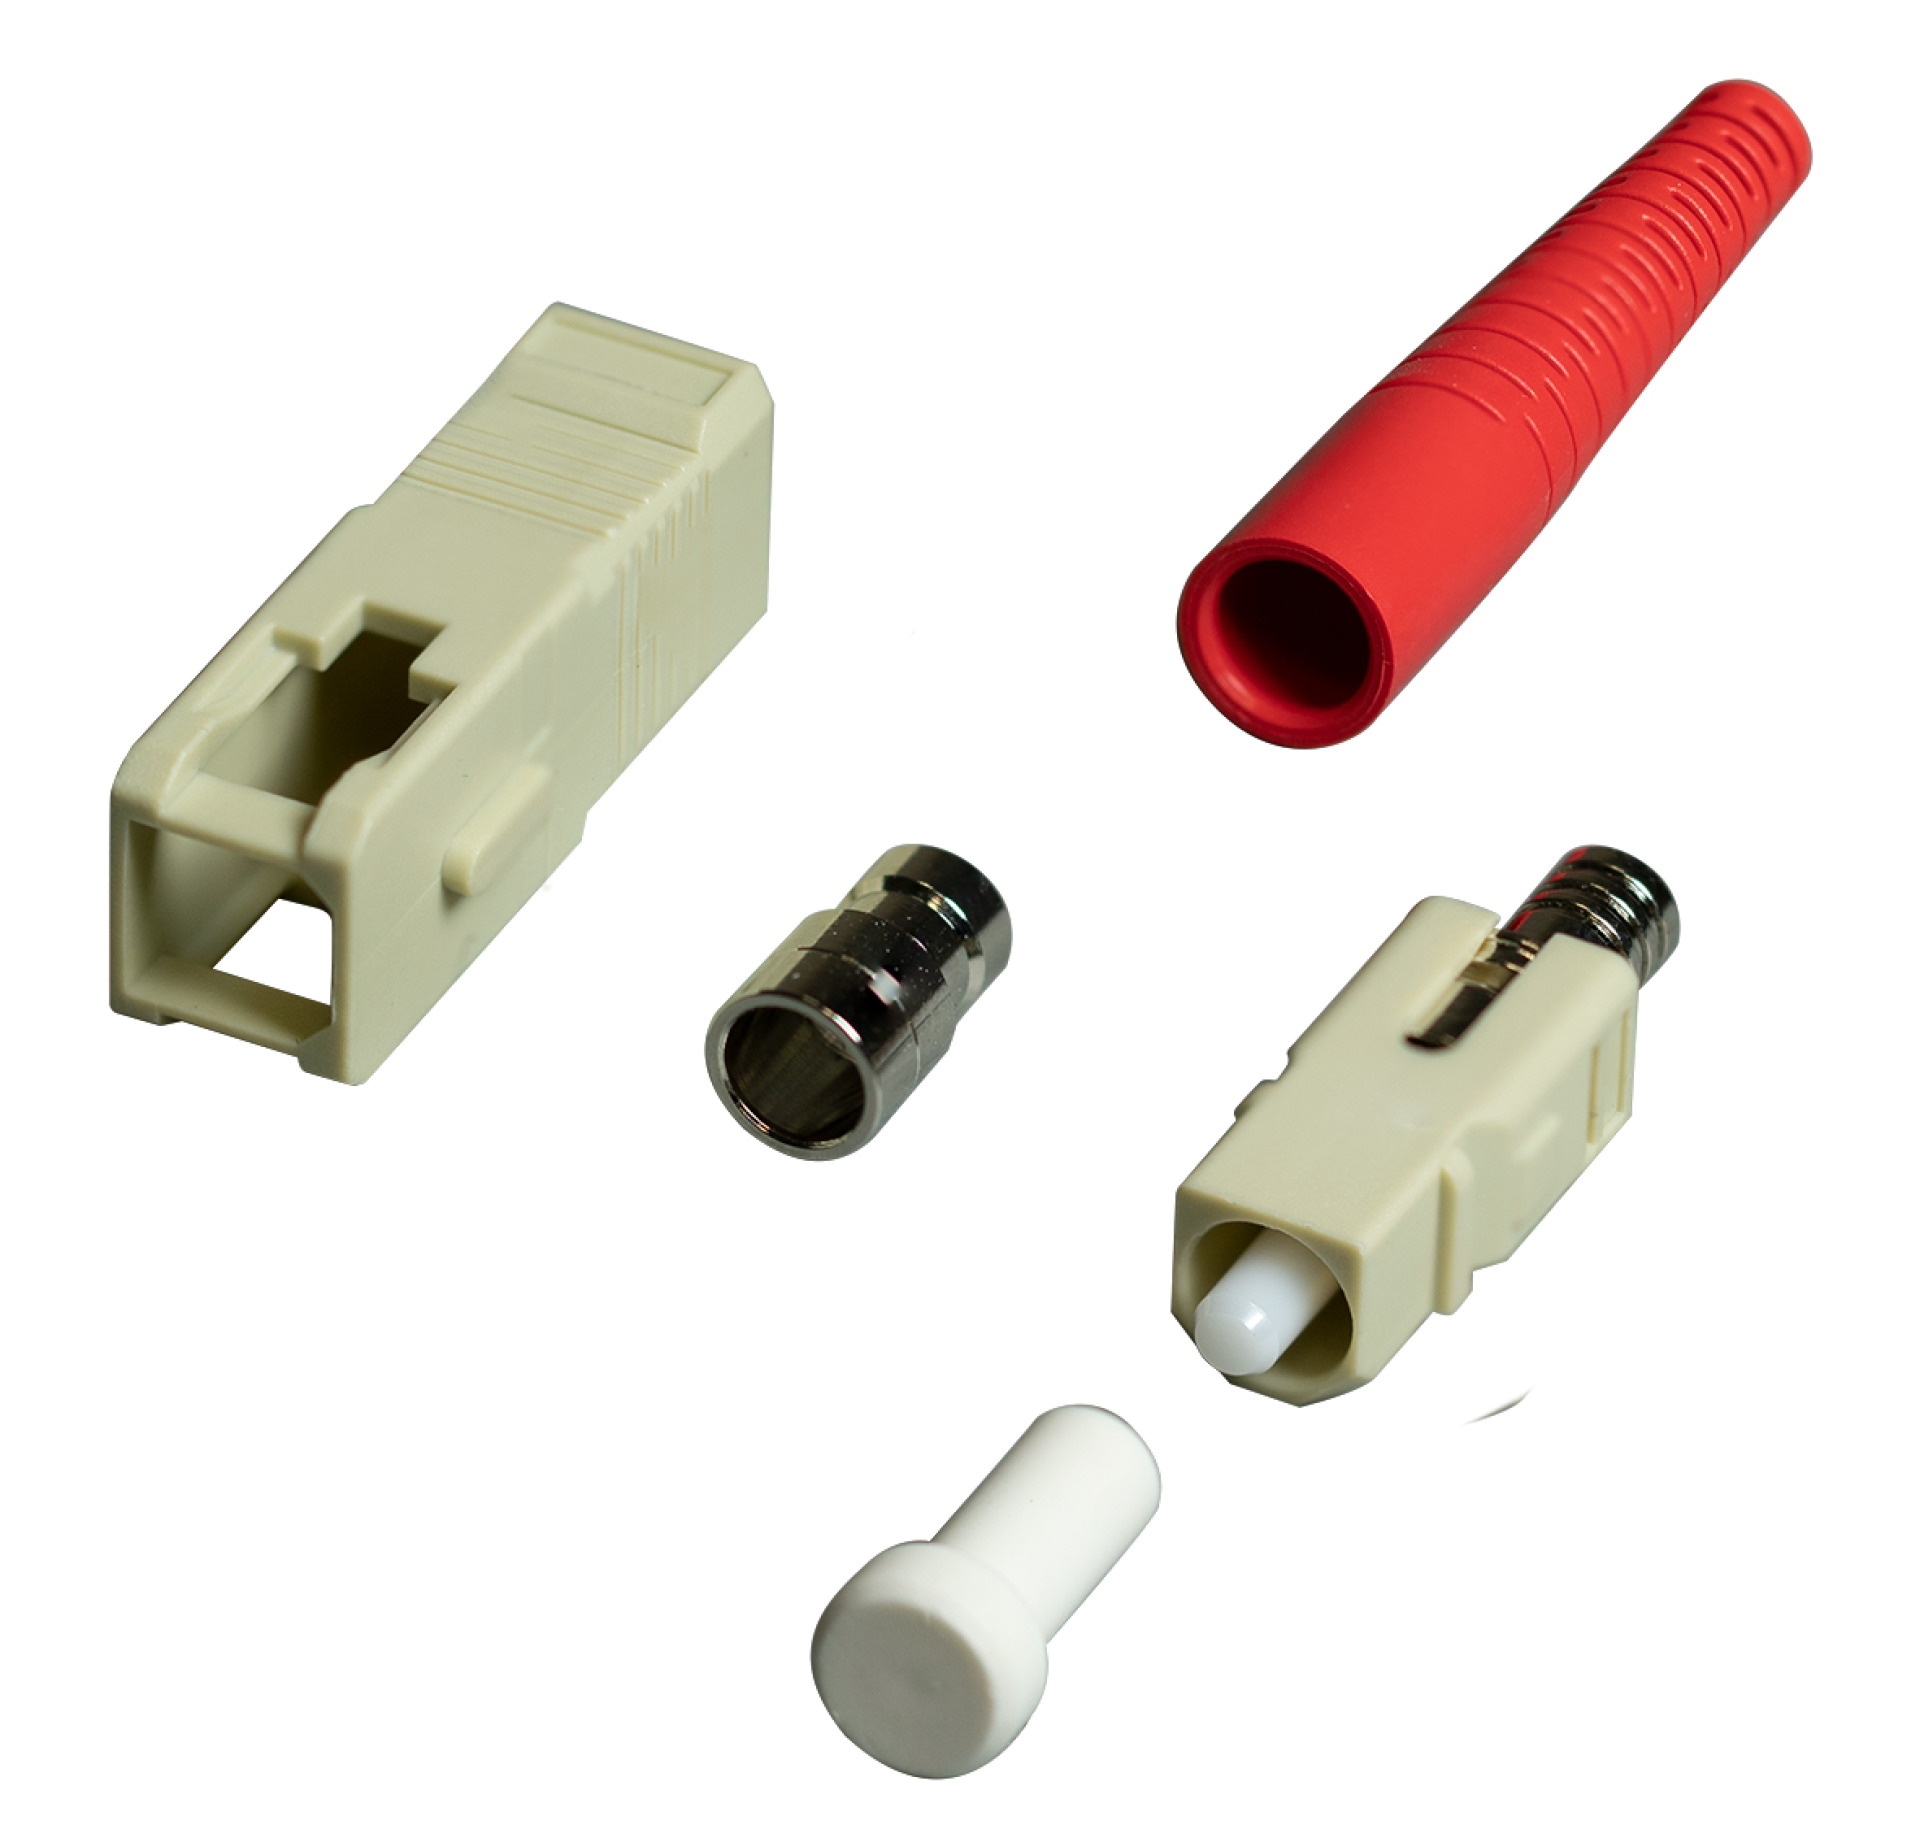 SC-Connector Simplex Multimode, 3mm, red grommet